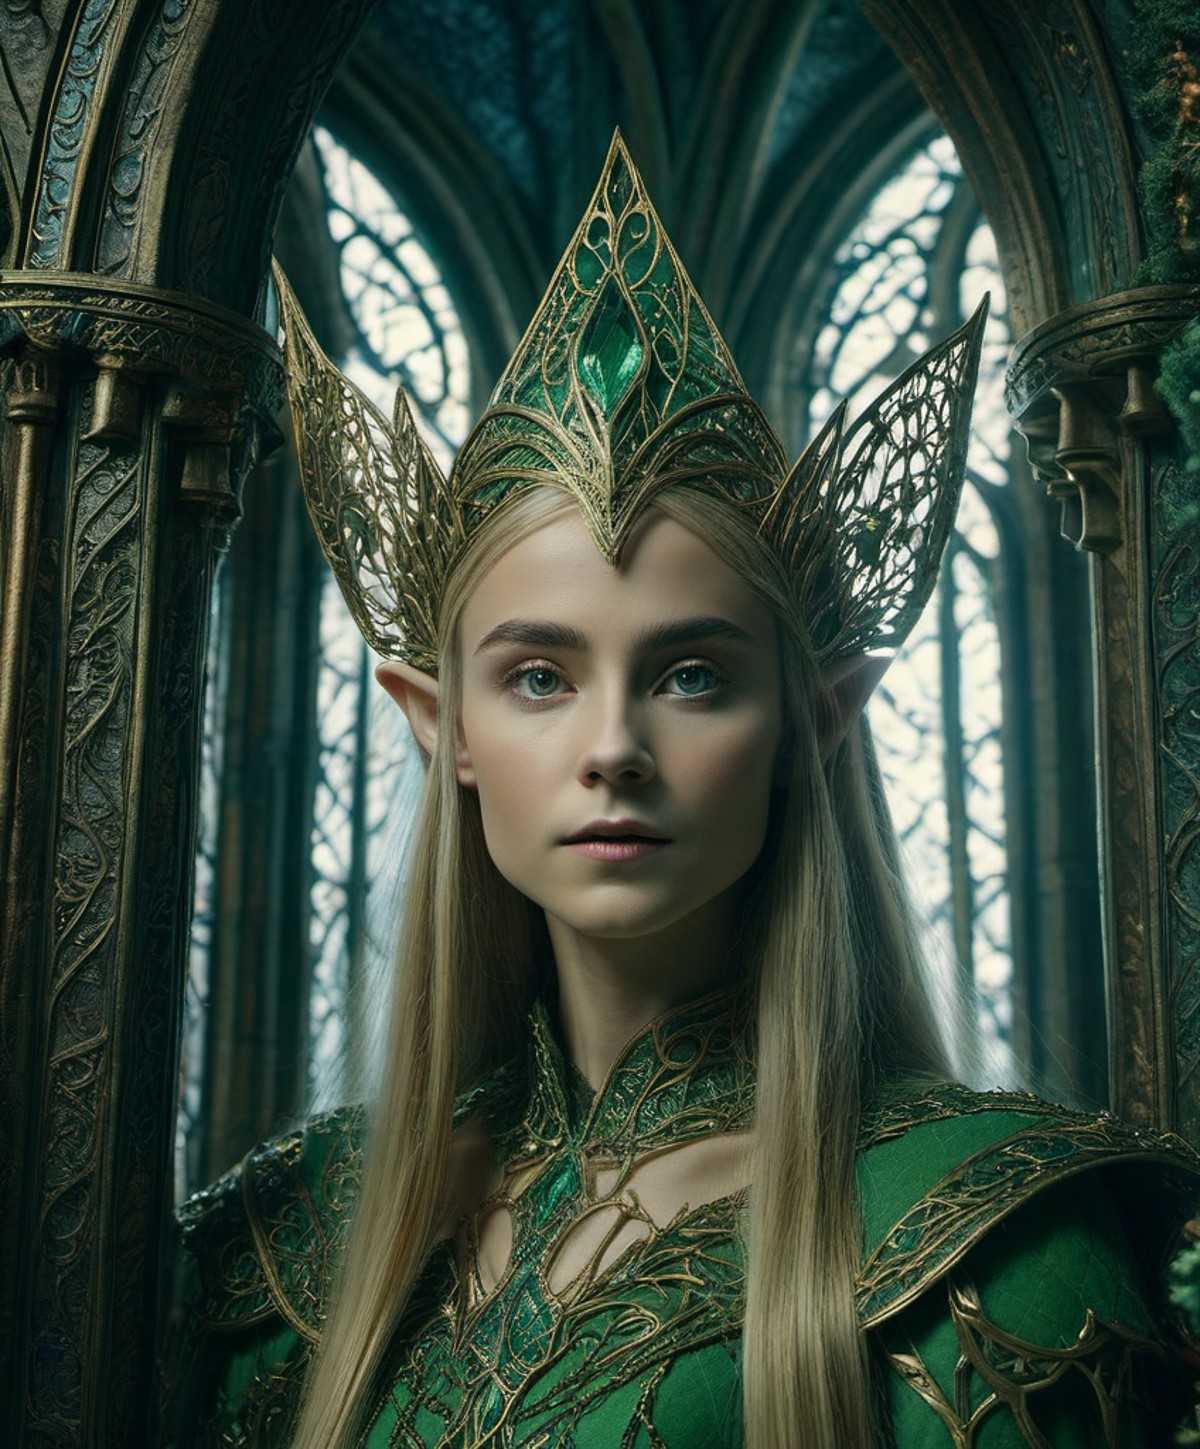 UHD, 8k, ultra detailed, vivid, cinematic, , a photograph of a elven princess in an elaborate elven castle, high fashion, 